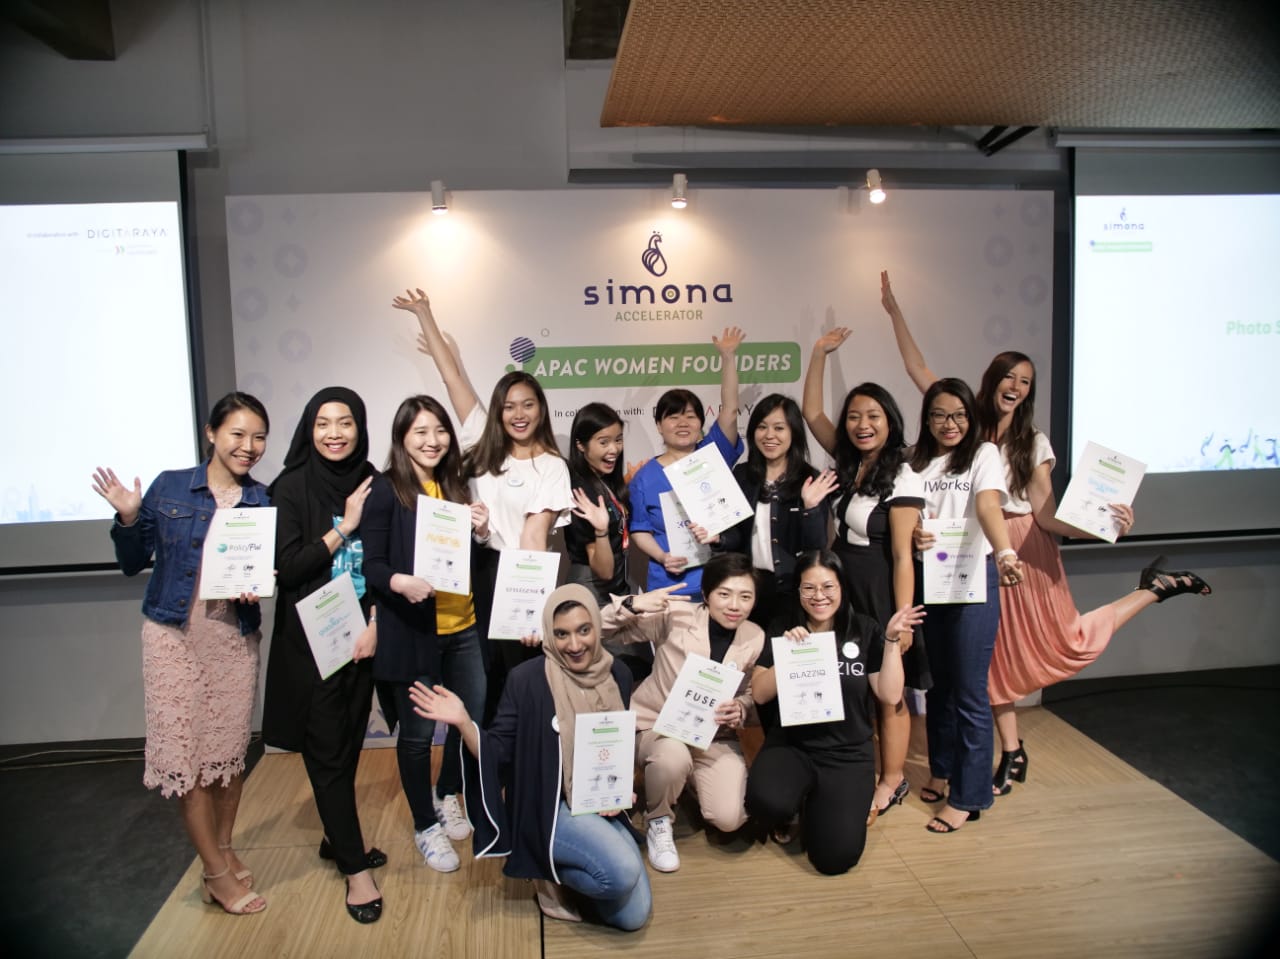 Indonesia-based Simona Ventures and Digitaraya team up to support women-led startups